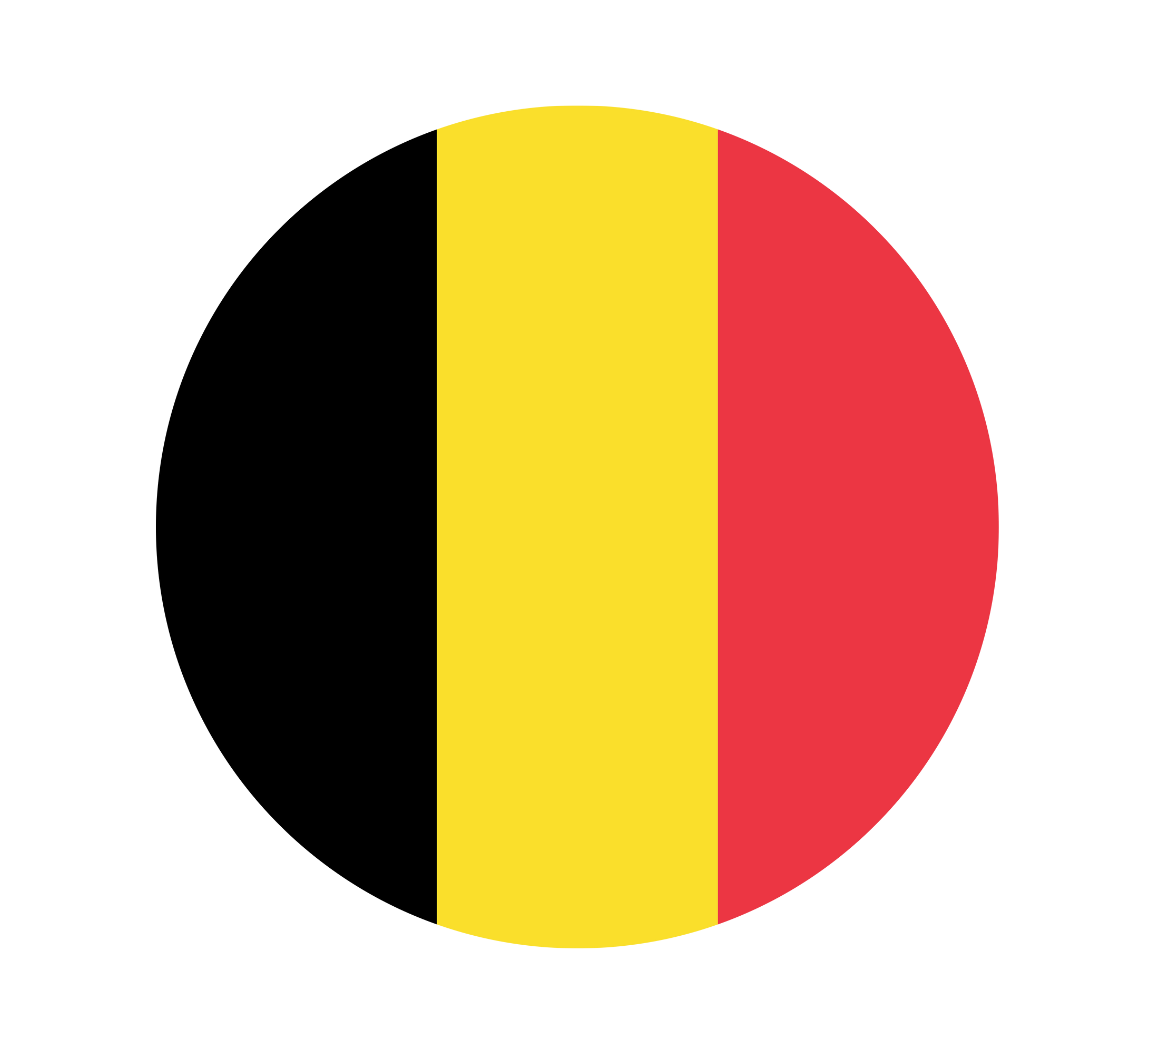 Belgium flag in a circle